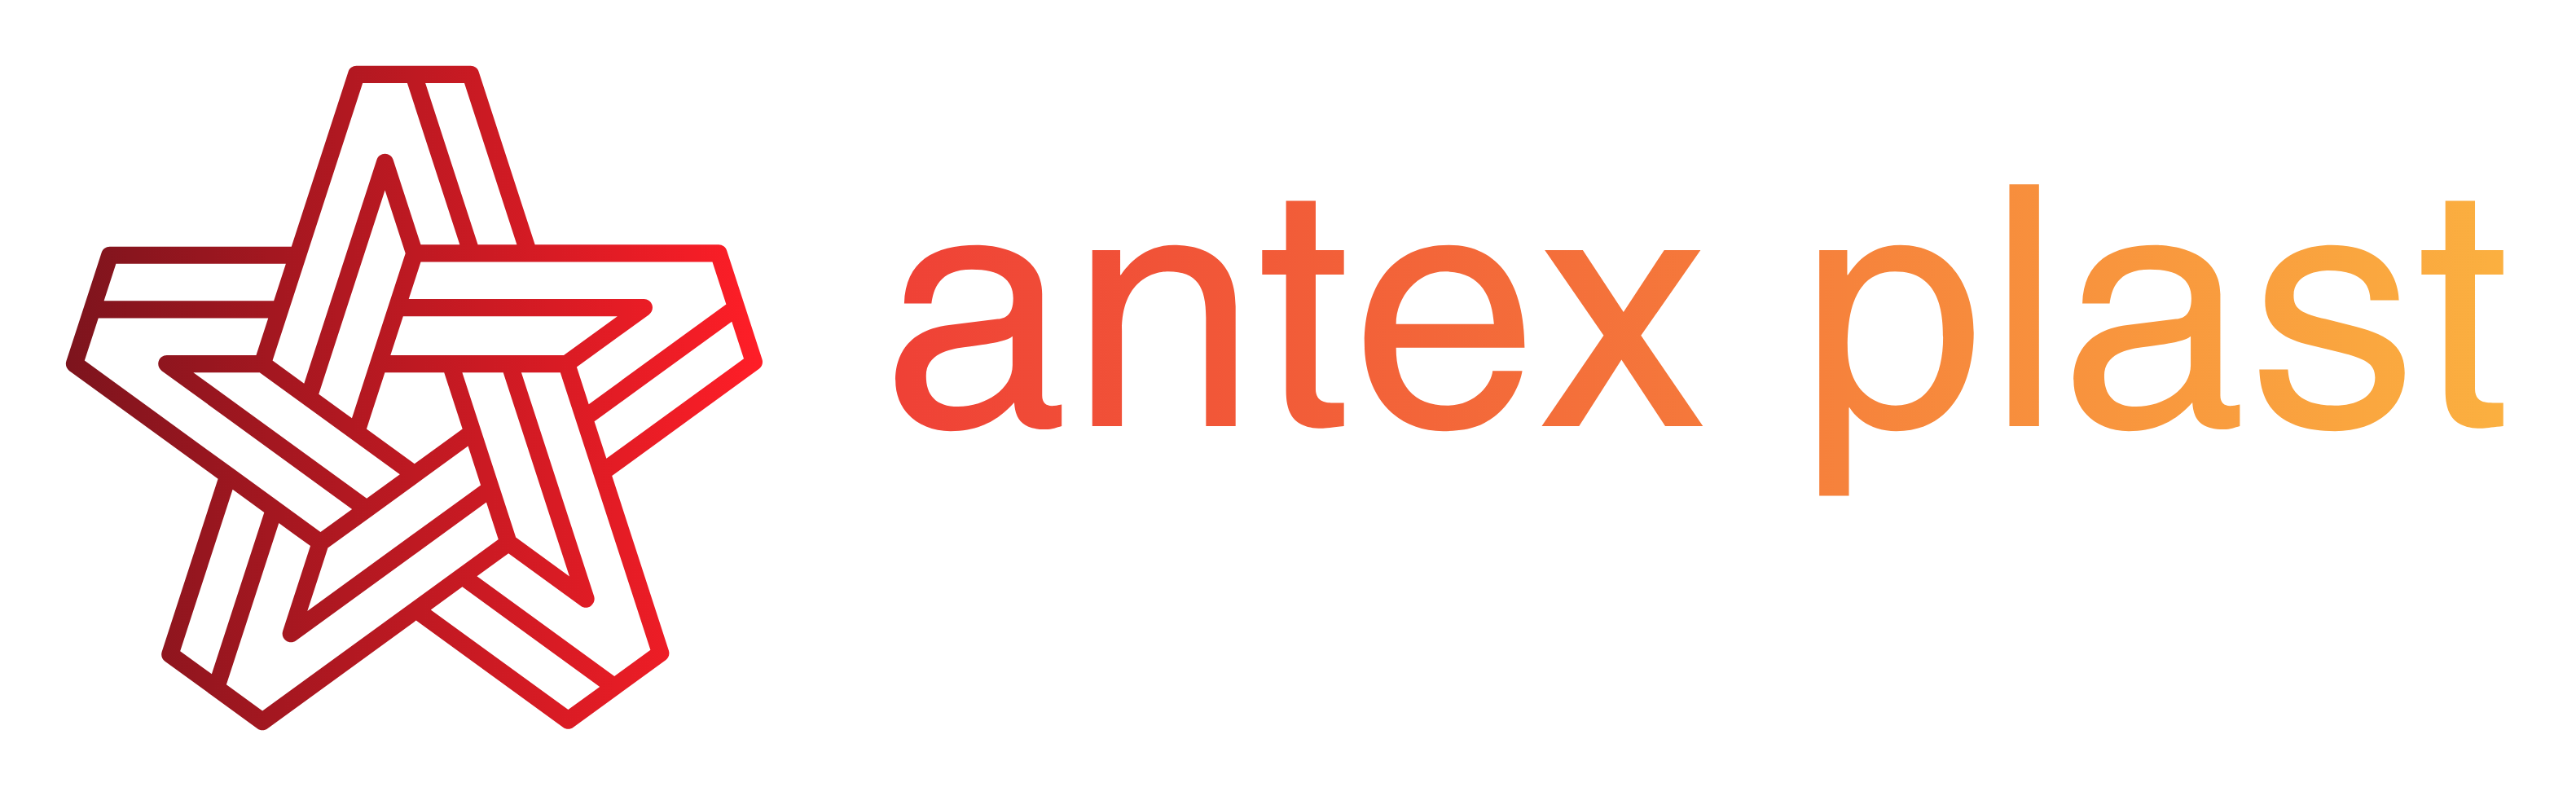 Antex plast